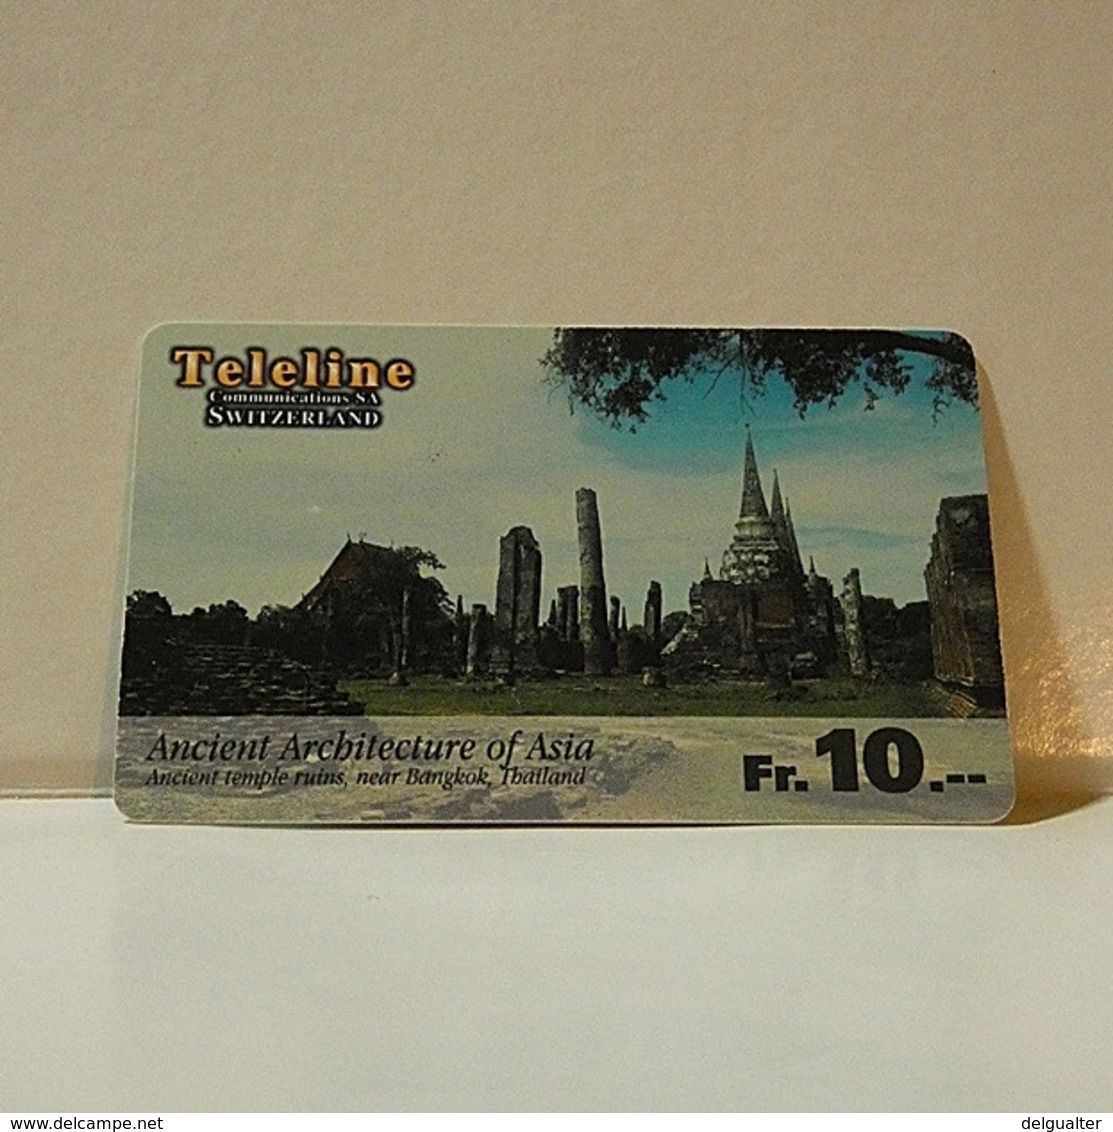 Phonecard - Switzerland - Teleline - 10 Francs - Schweiz